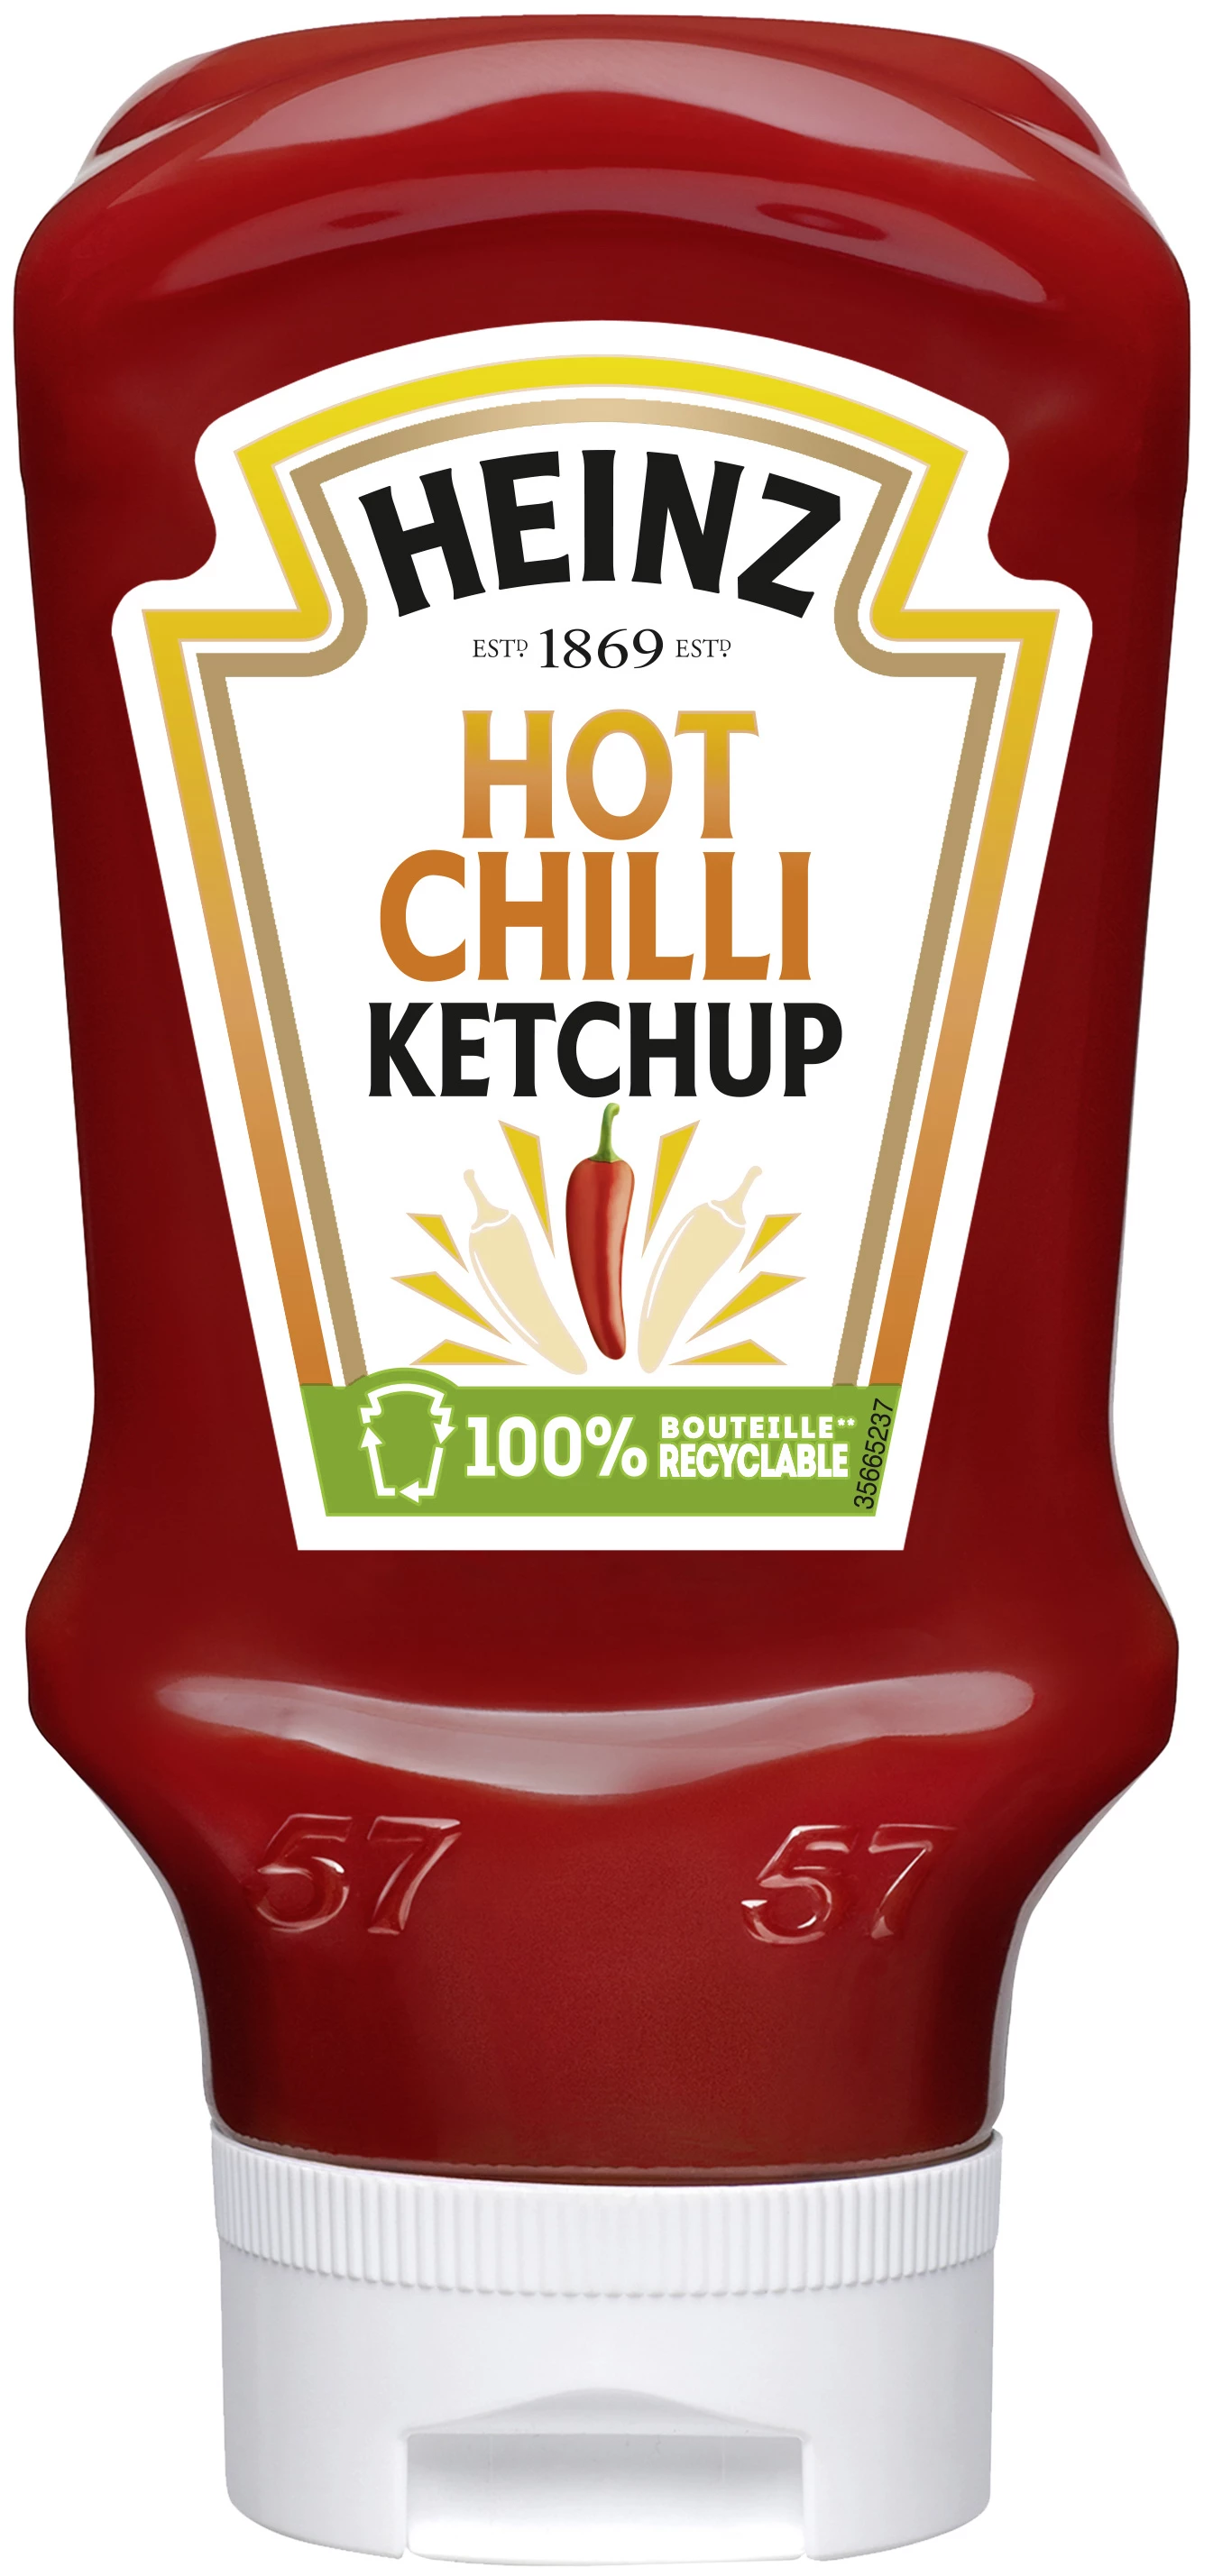 Hot Chili Ketchup, 400ml - HEINZ